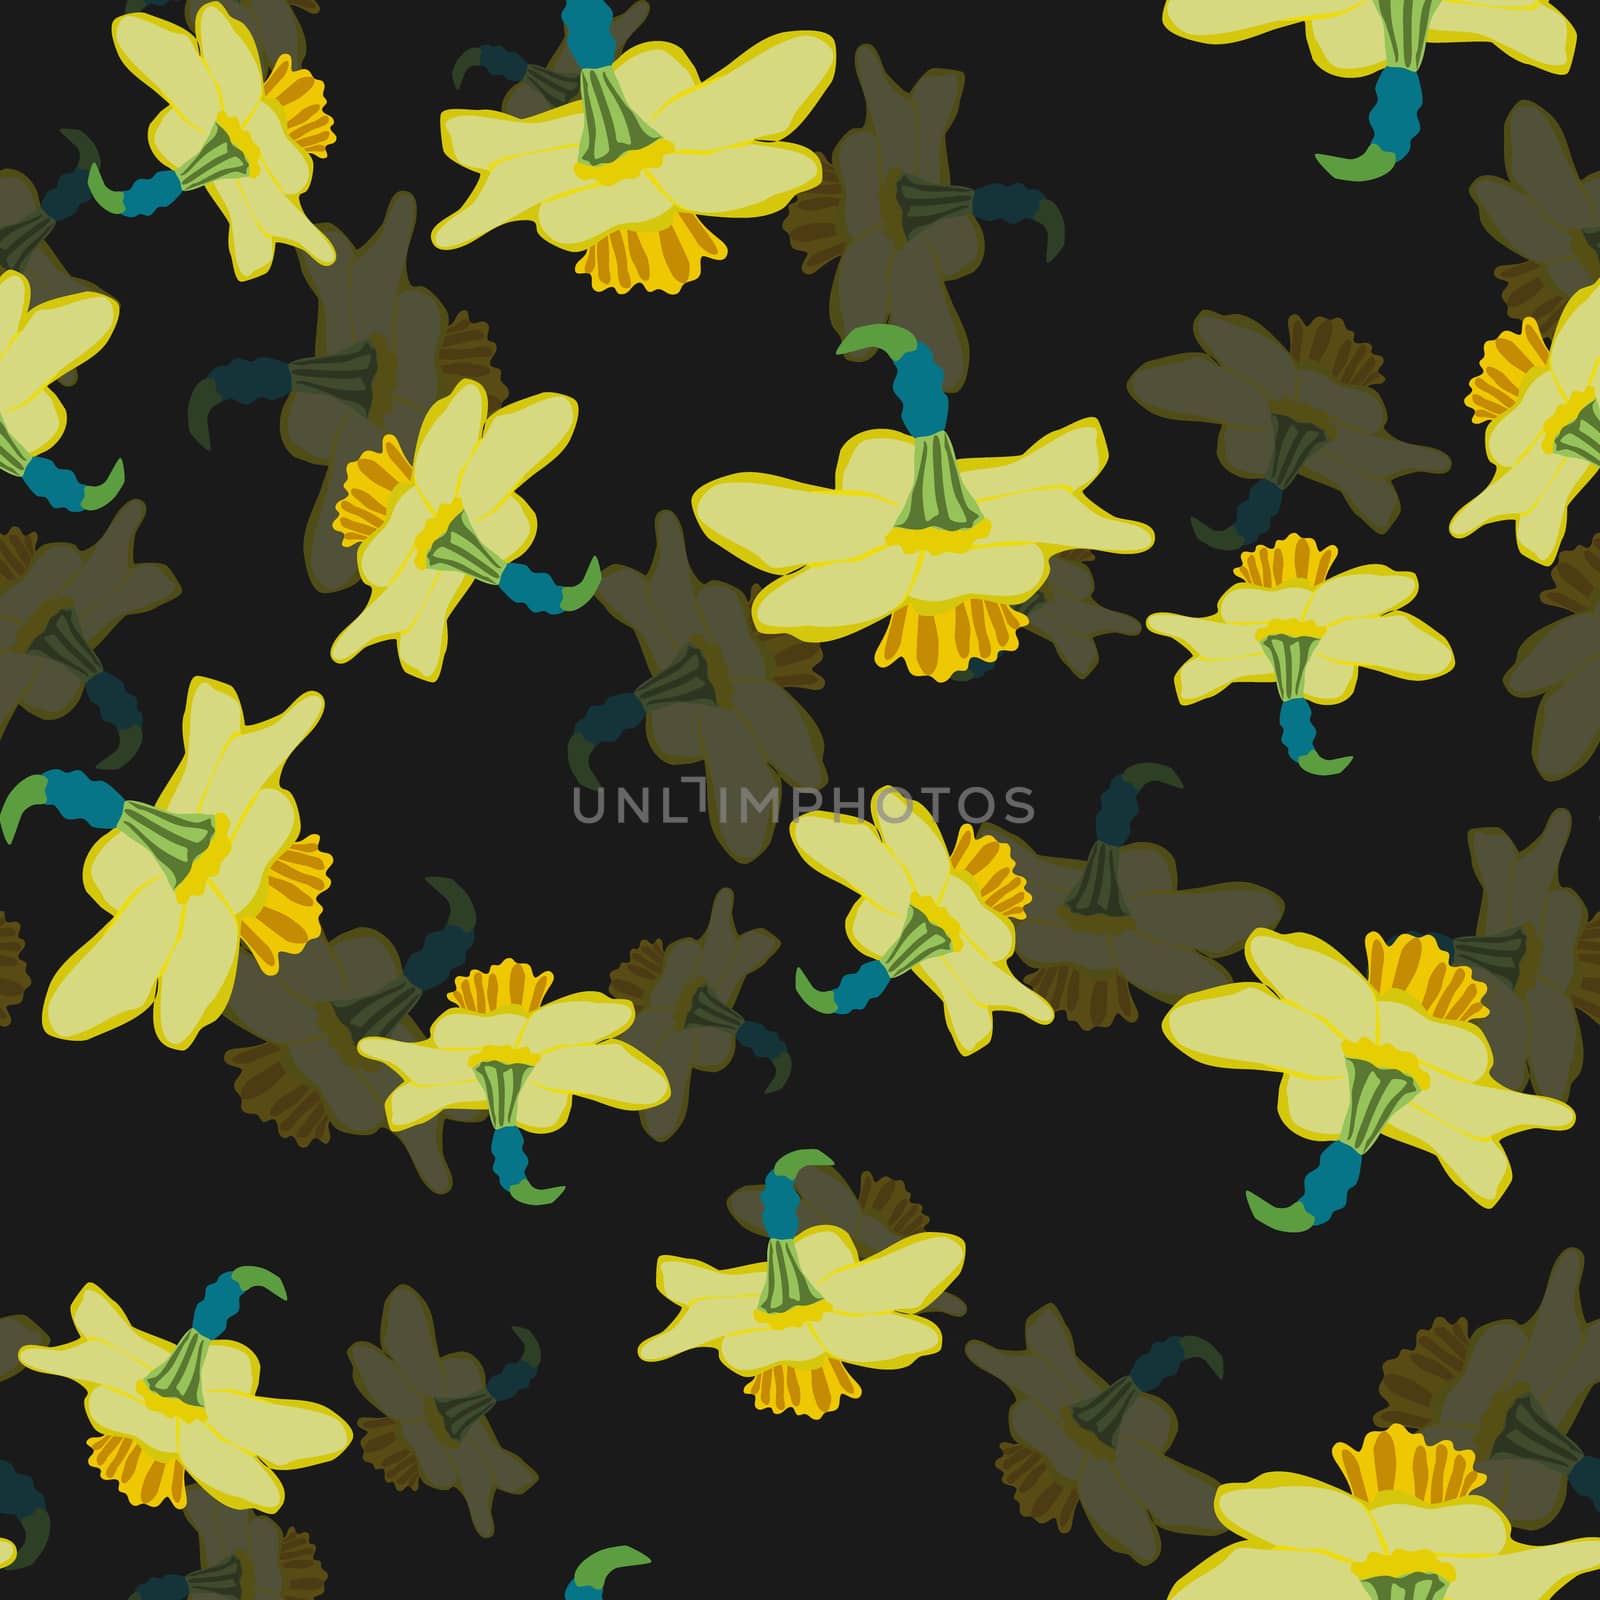 Daffodils volume effect seamless pattern on black background by Nata_Prando